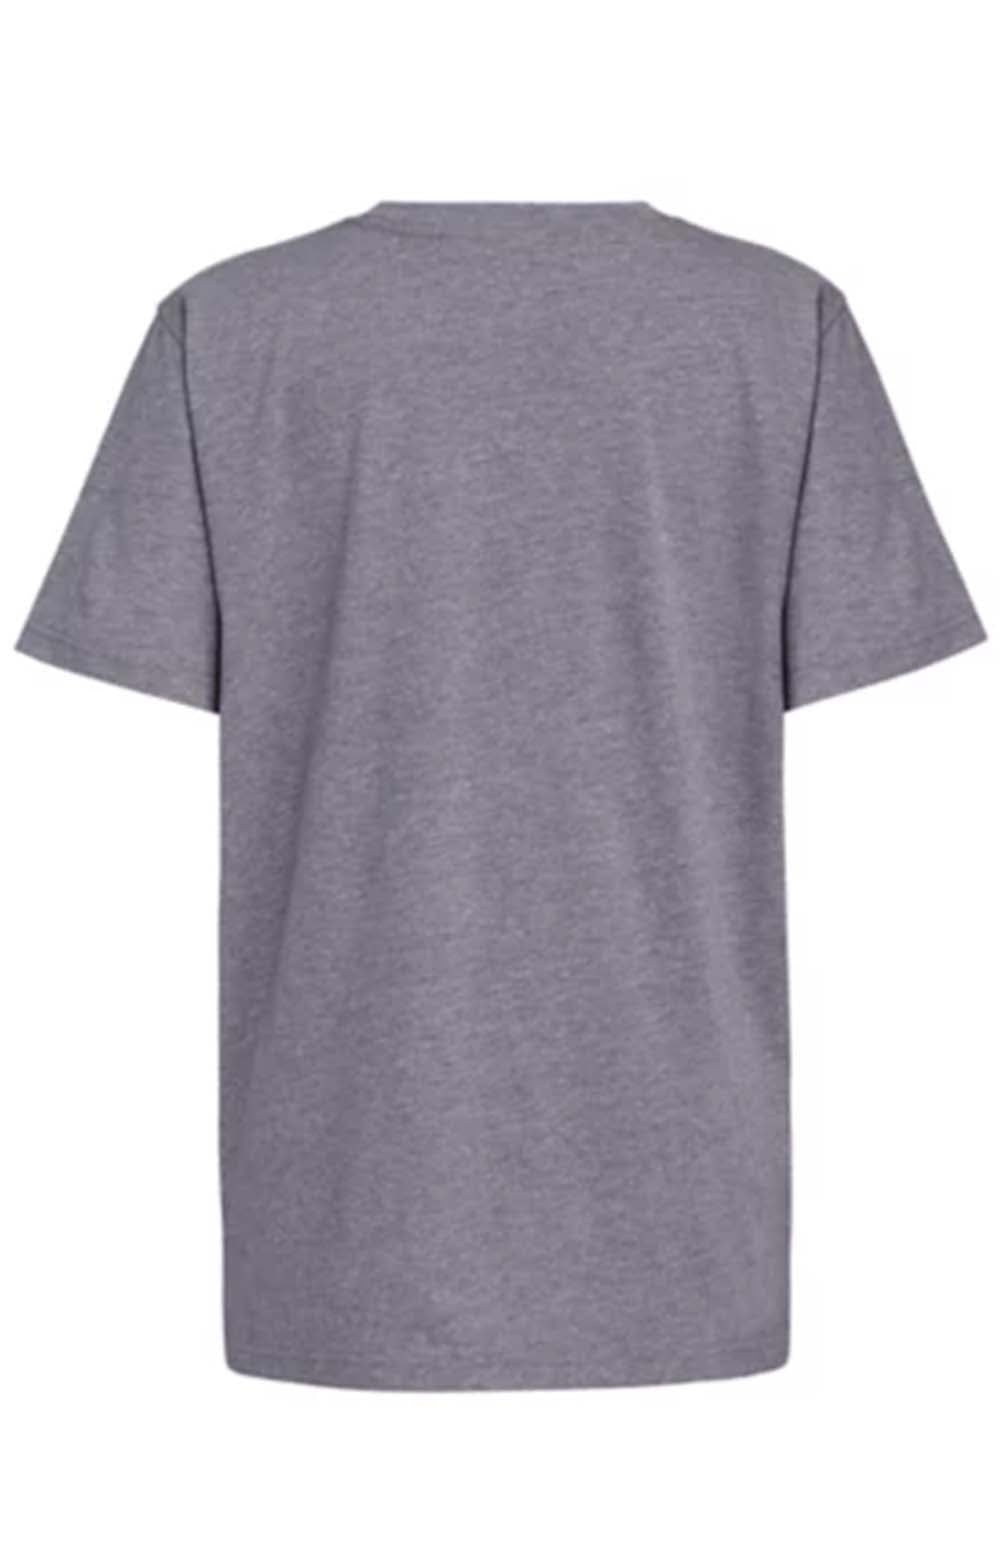 (AA7422) Adidas Basketball Heather T-Shirt - Charcoal